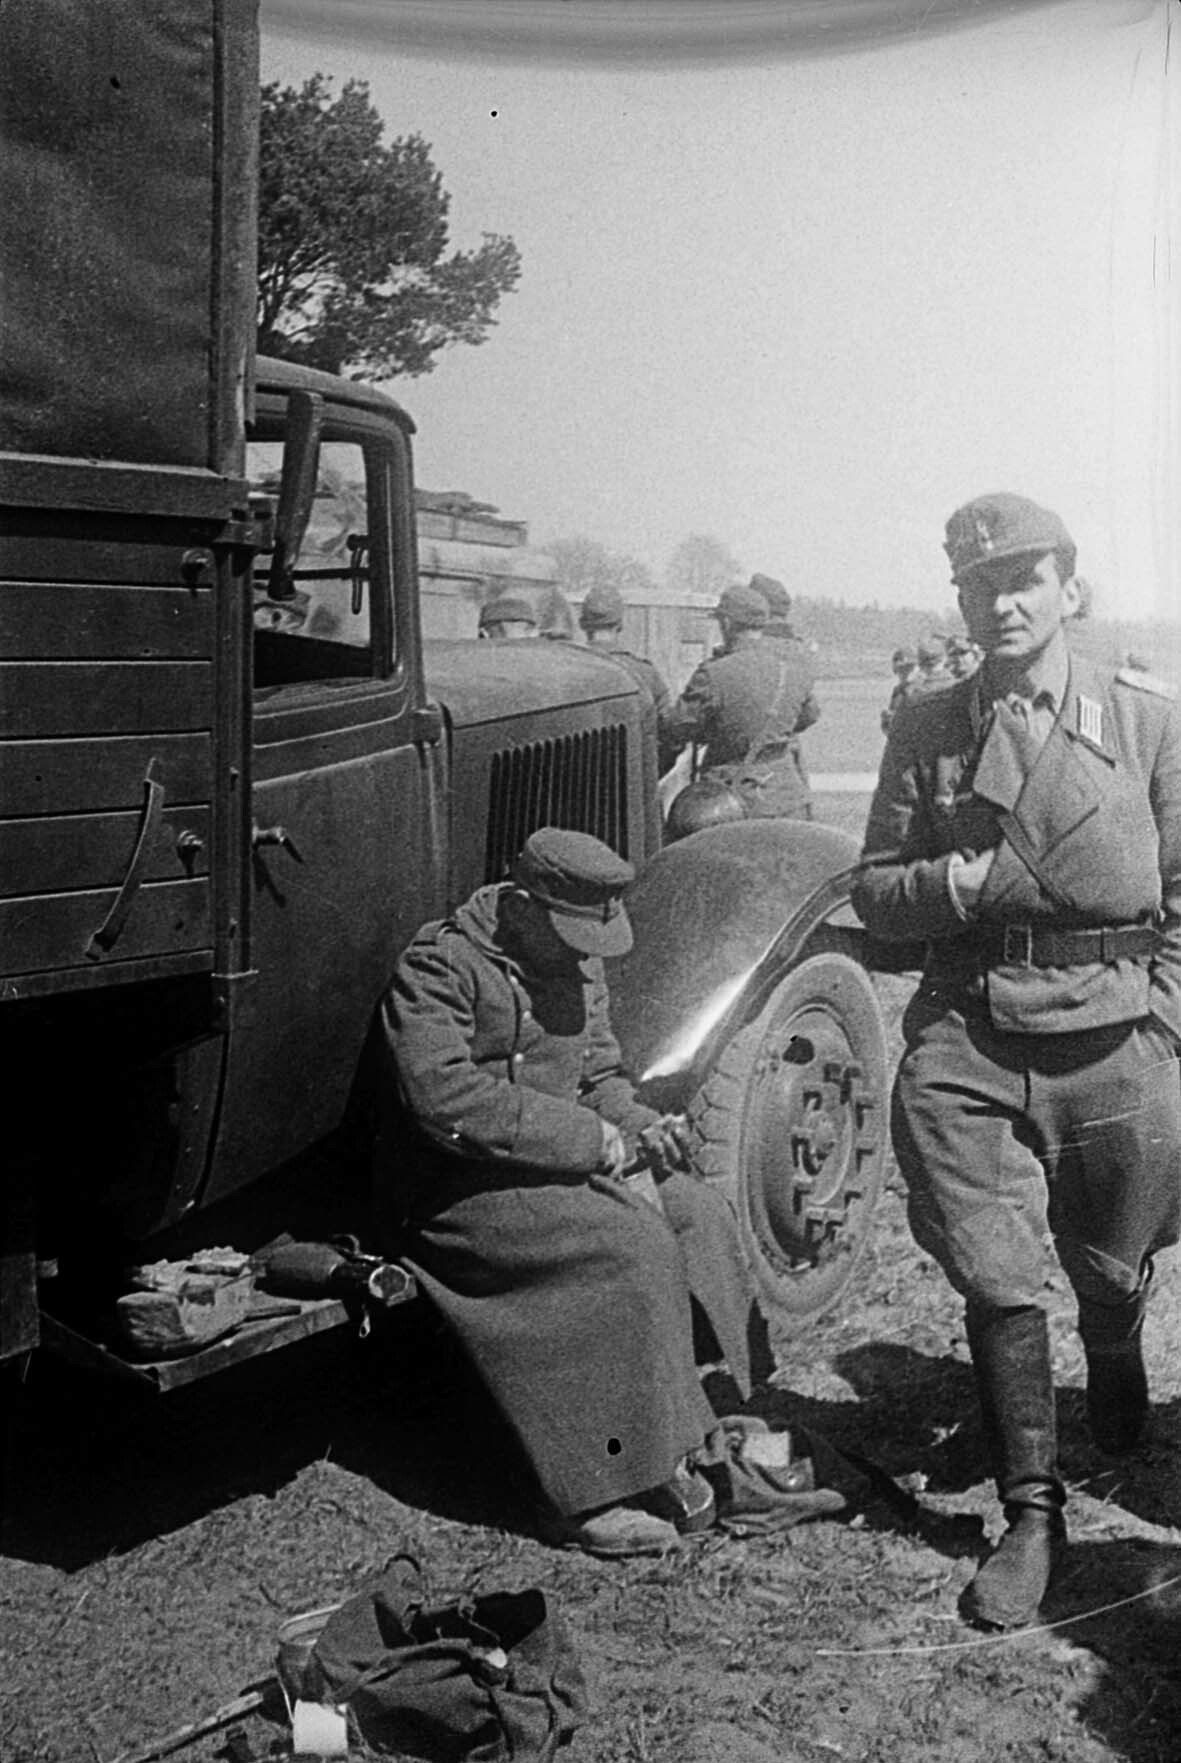 Fotografie: Drei kriegsgefangene Wehrmachtsoldaten, Lettland, 9. Mai 1945 (Museum Berlin-Karlshorst RR-R)